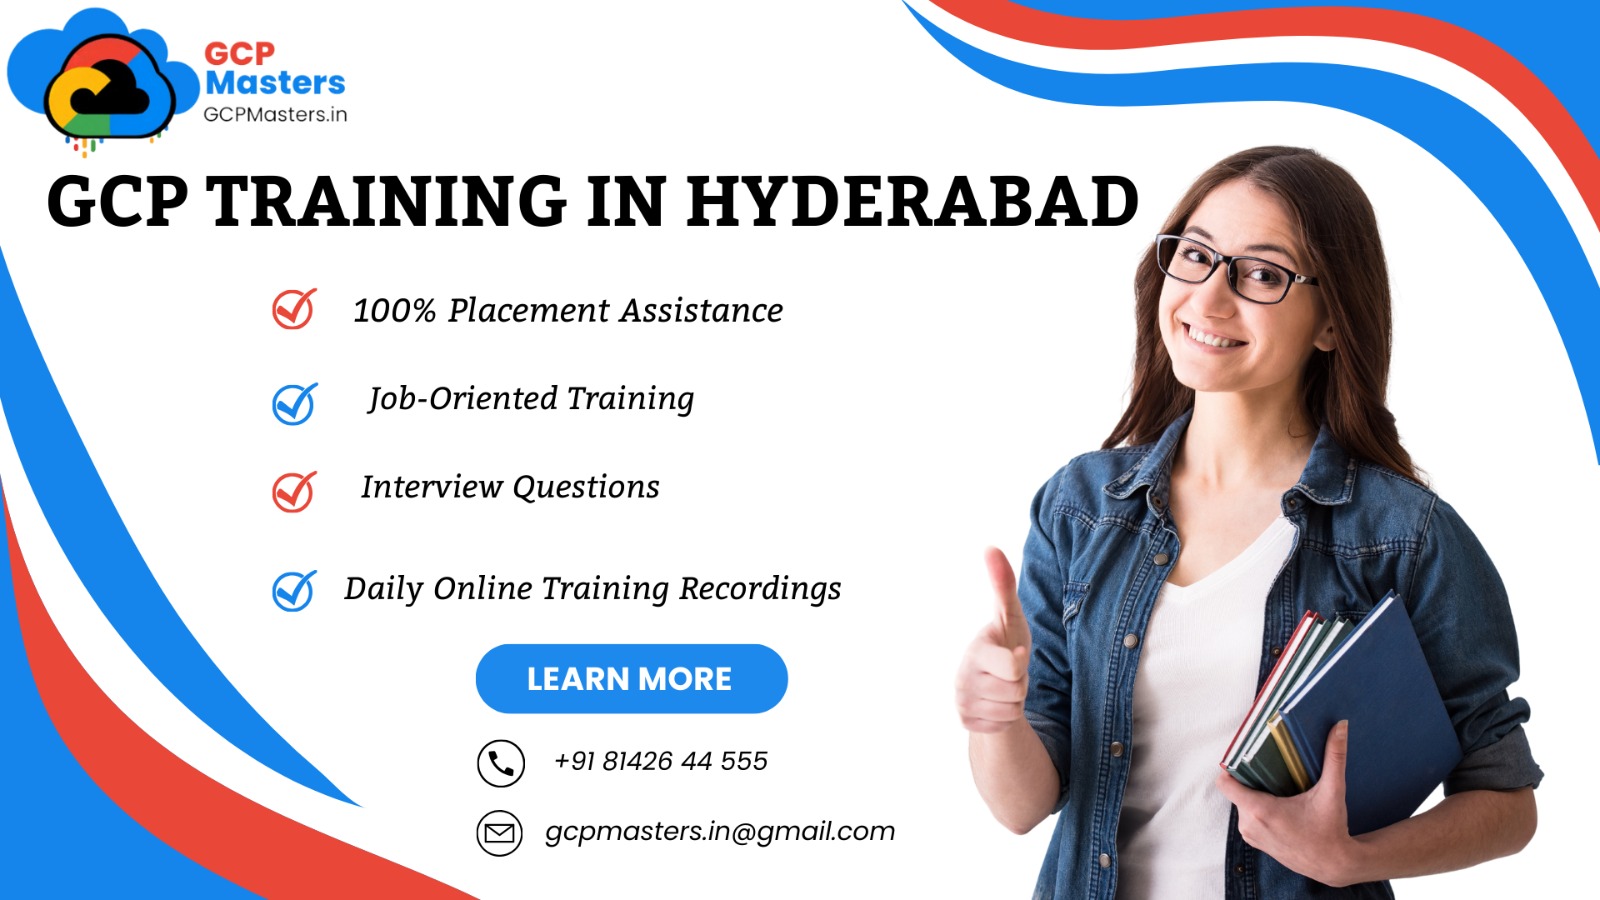 Gcp training in hyderabad, Hyderabad, Telangana, India